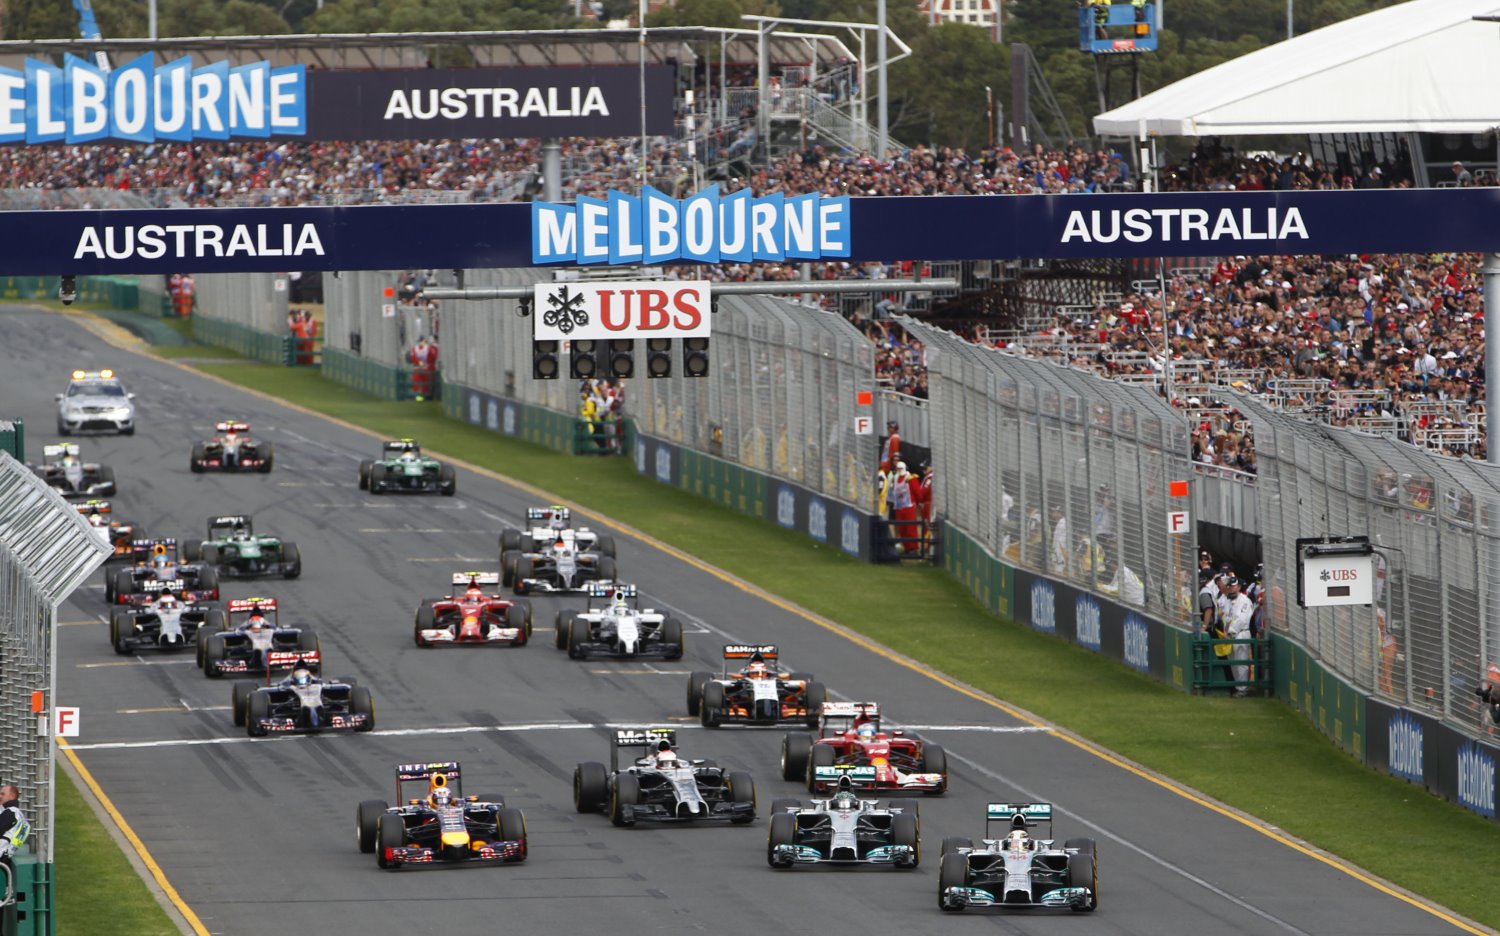 Australian GP to probably move a week earlier in 2019